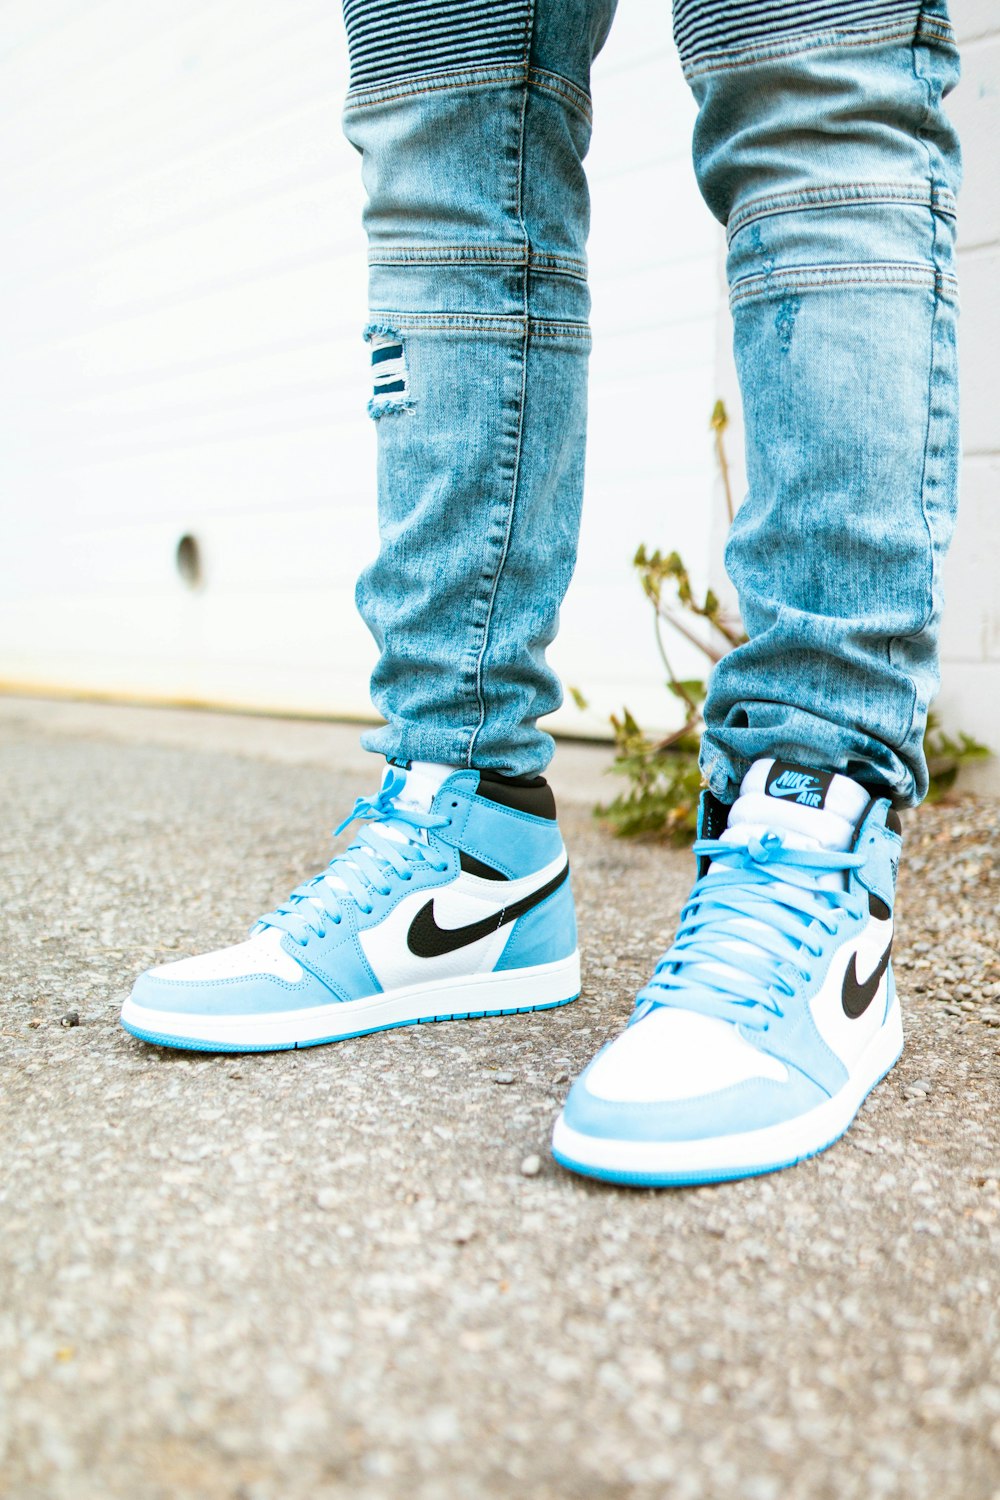 zorro grabadora amortiguar Person in blue denim jeans and blue and white nike sneakers photo – Free  Shoe Image on Unsplash